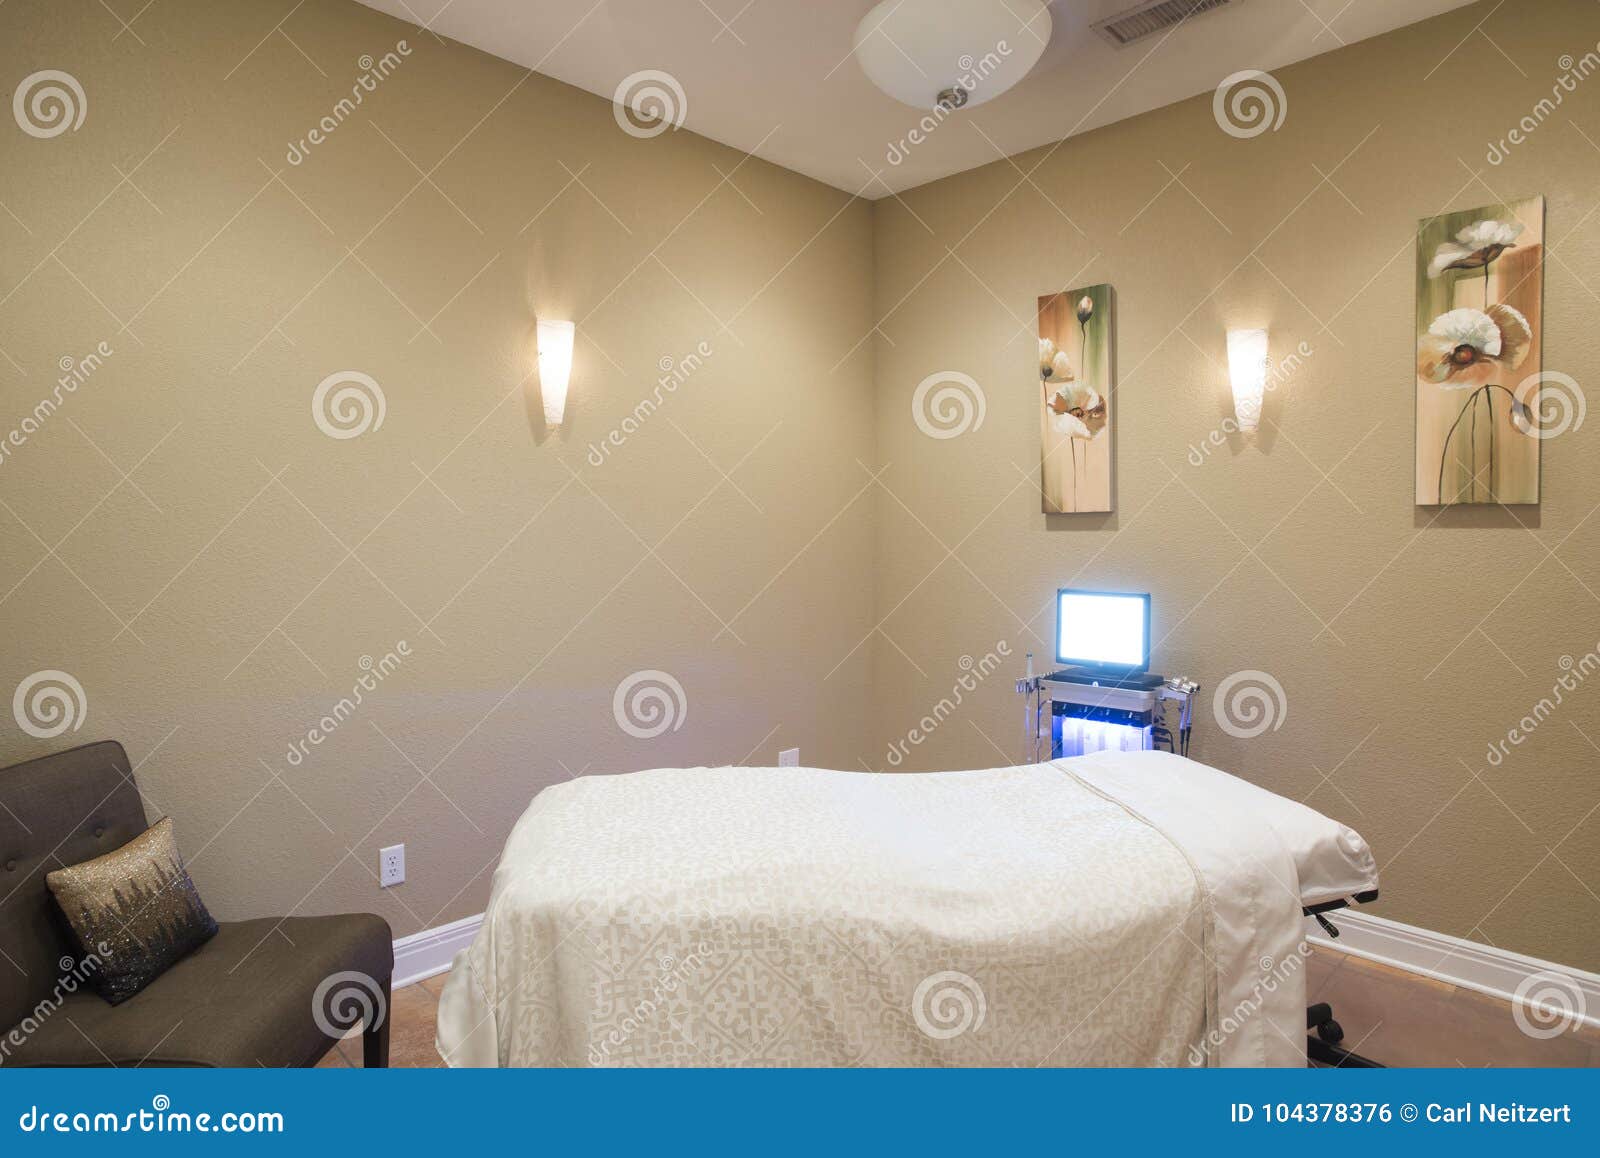 confortable massage room